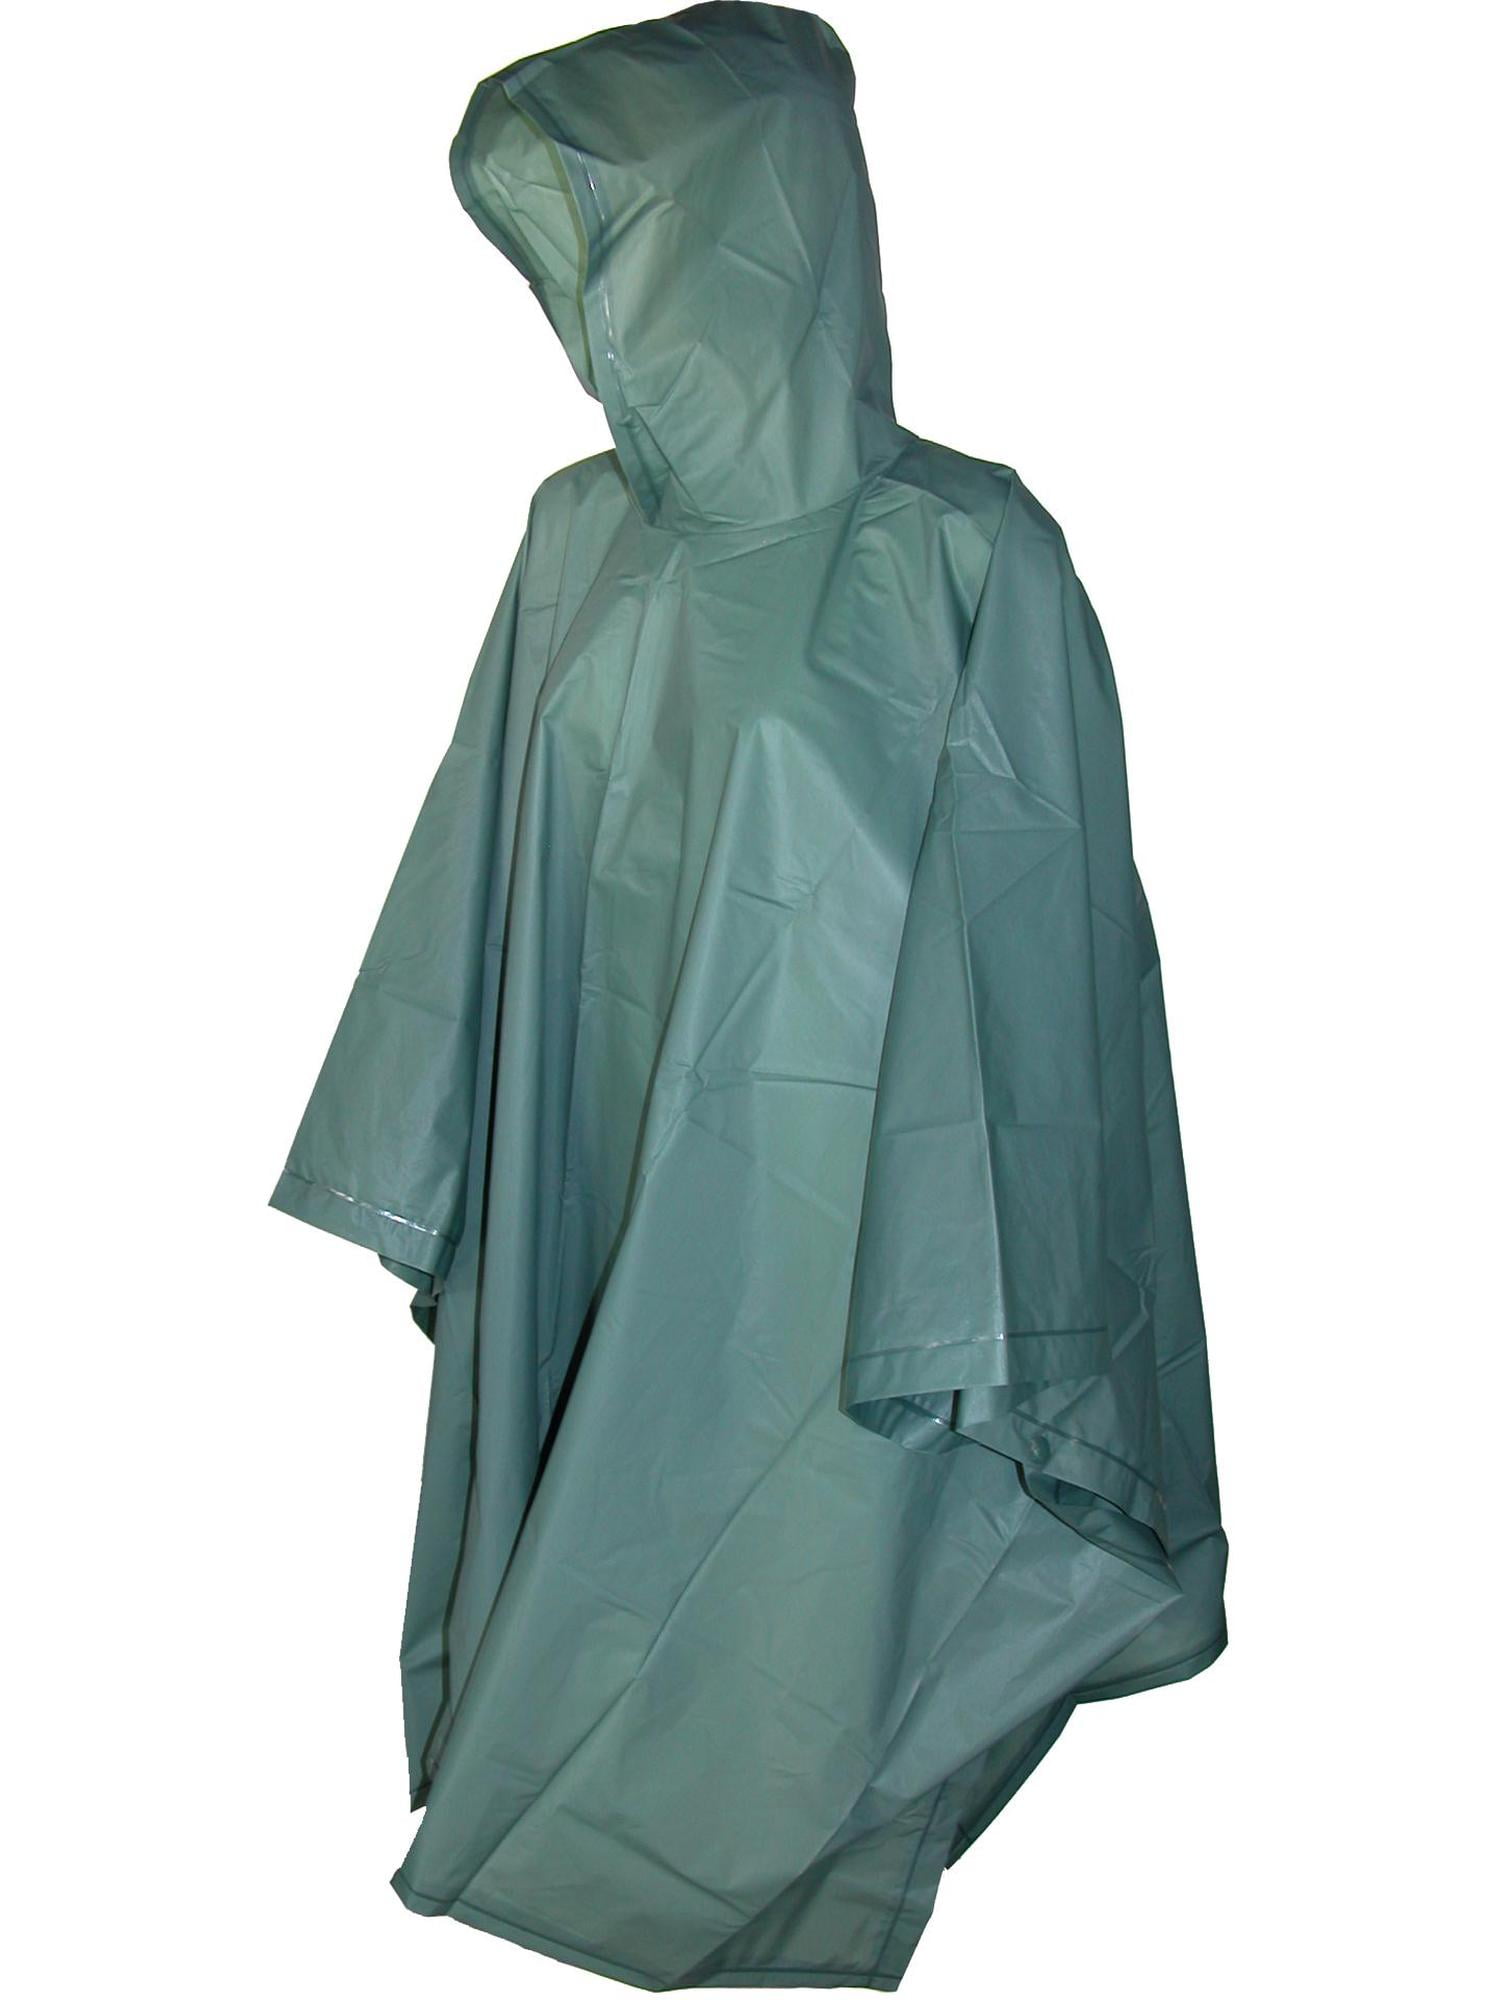 Unisex Rain Ponchos Raincoat Rain Jacket Adult Hooded Pullover Rain Poncho Waterproof Plus Size Poncho